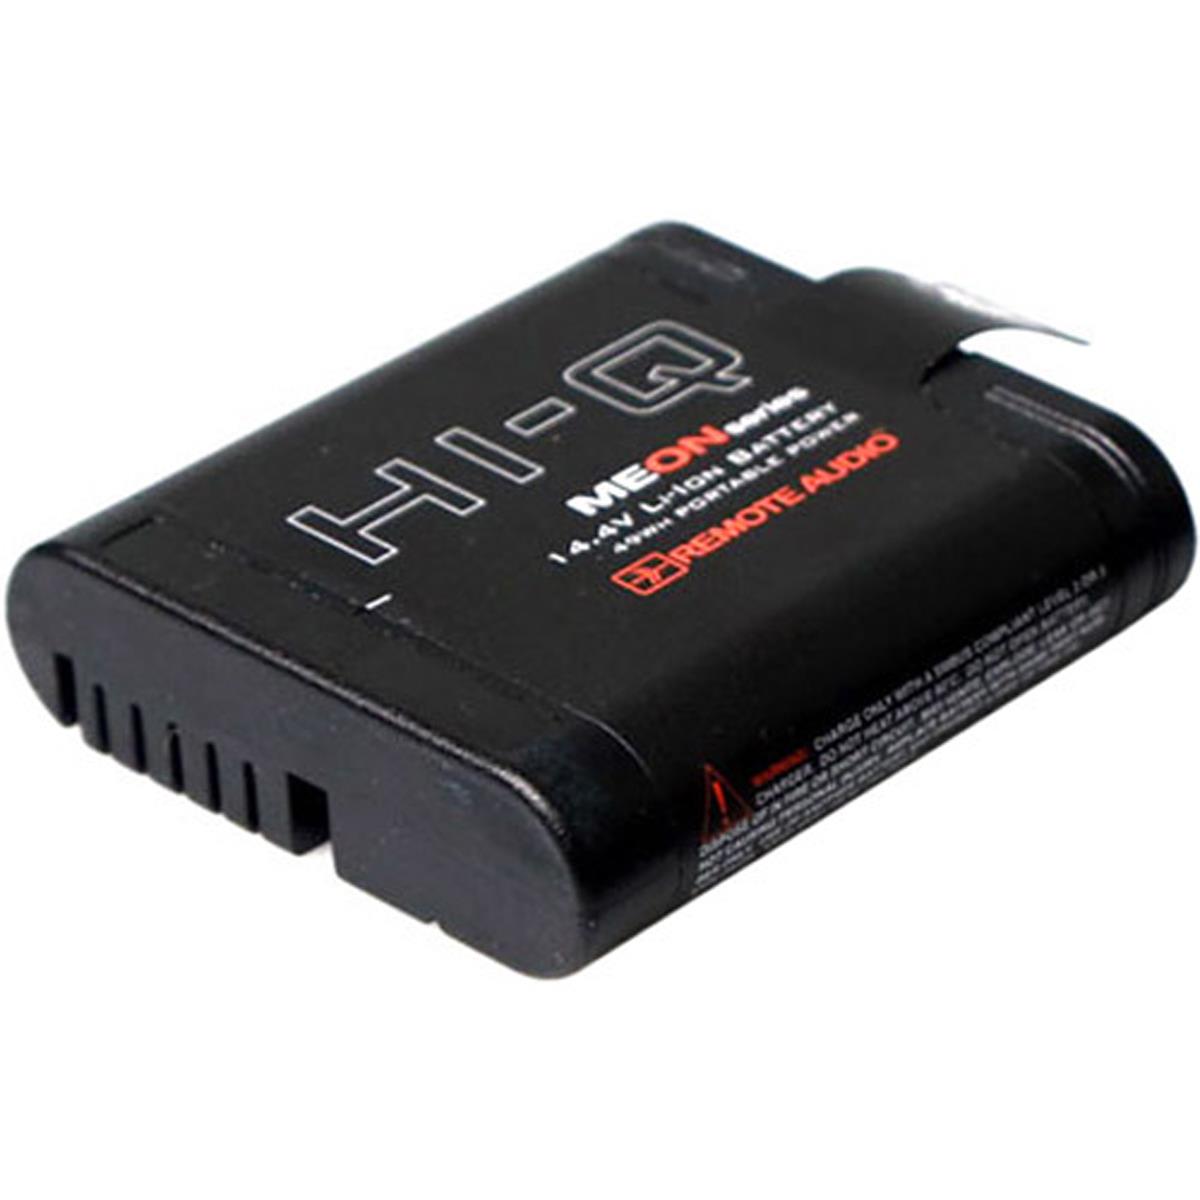 

Remote Audio 49WH 14.4V Hi-Q Portable Lithium-Ion Battery